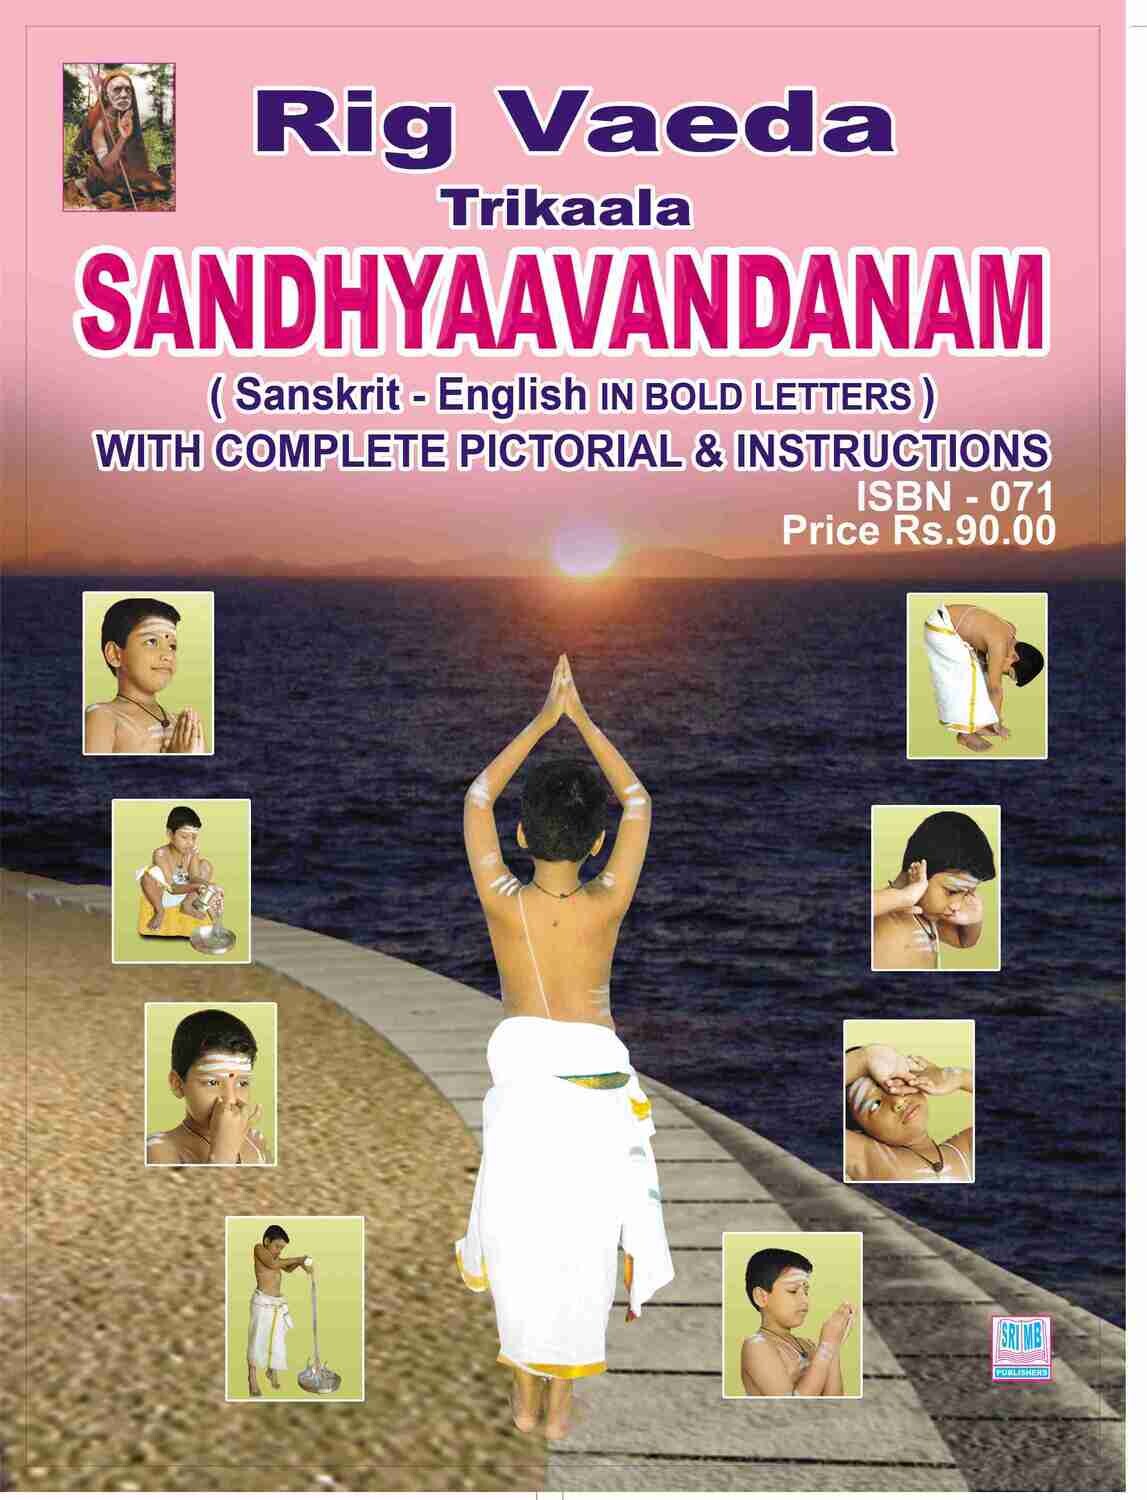 Rig Vaeda Sandhyaavandanam (Sanskrit-English with pictorial instructions)